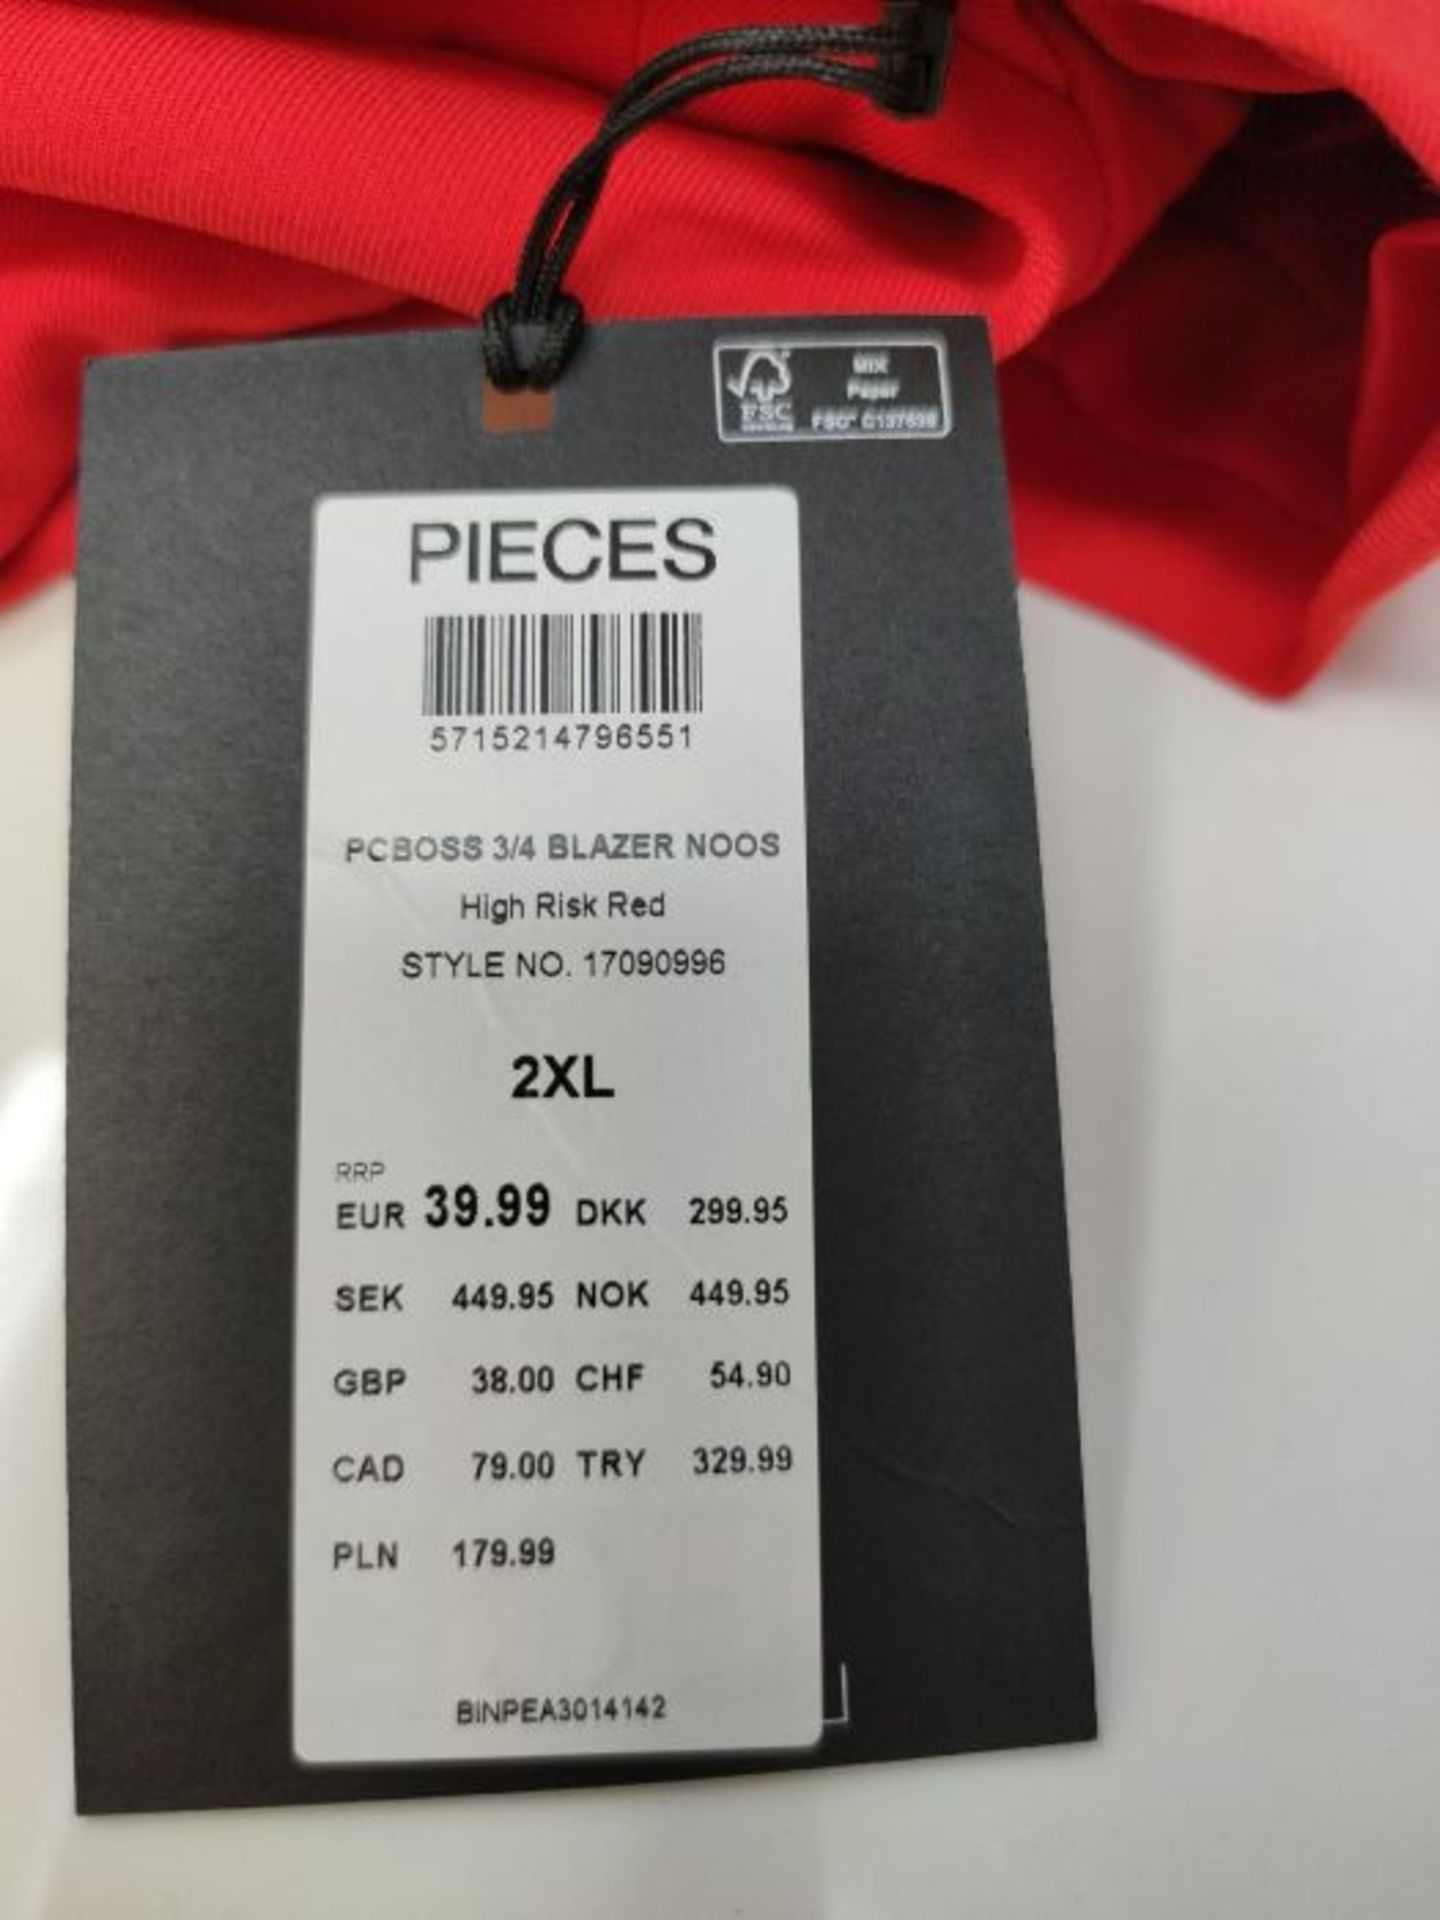 Pieces Women's PCBOSS 3/4 Blazer NOOS, High Risk Red, 2XL - Image 3 of 3